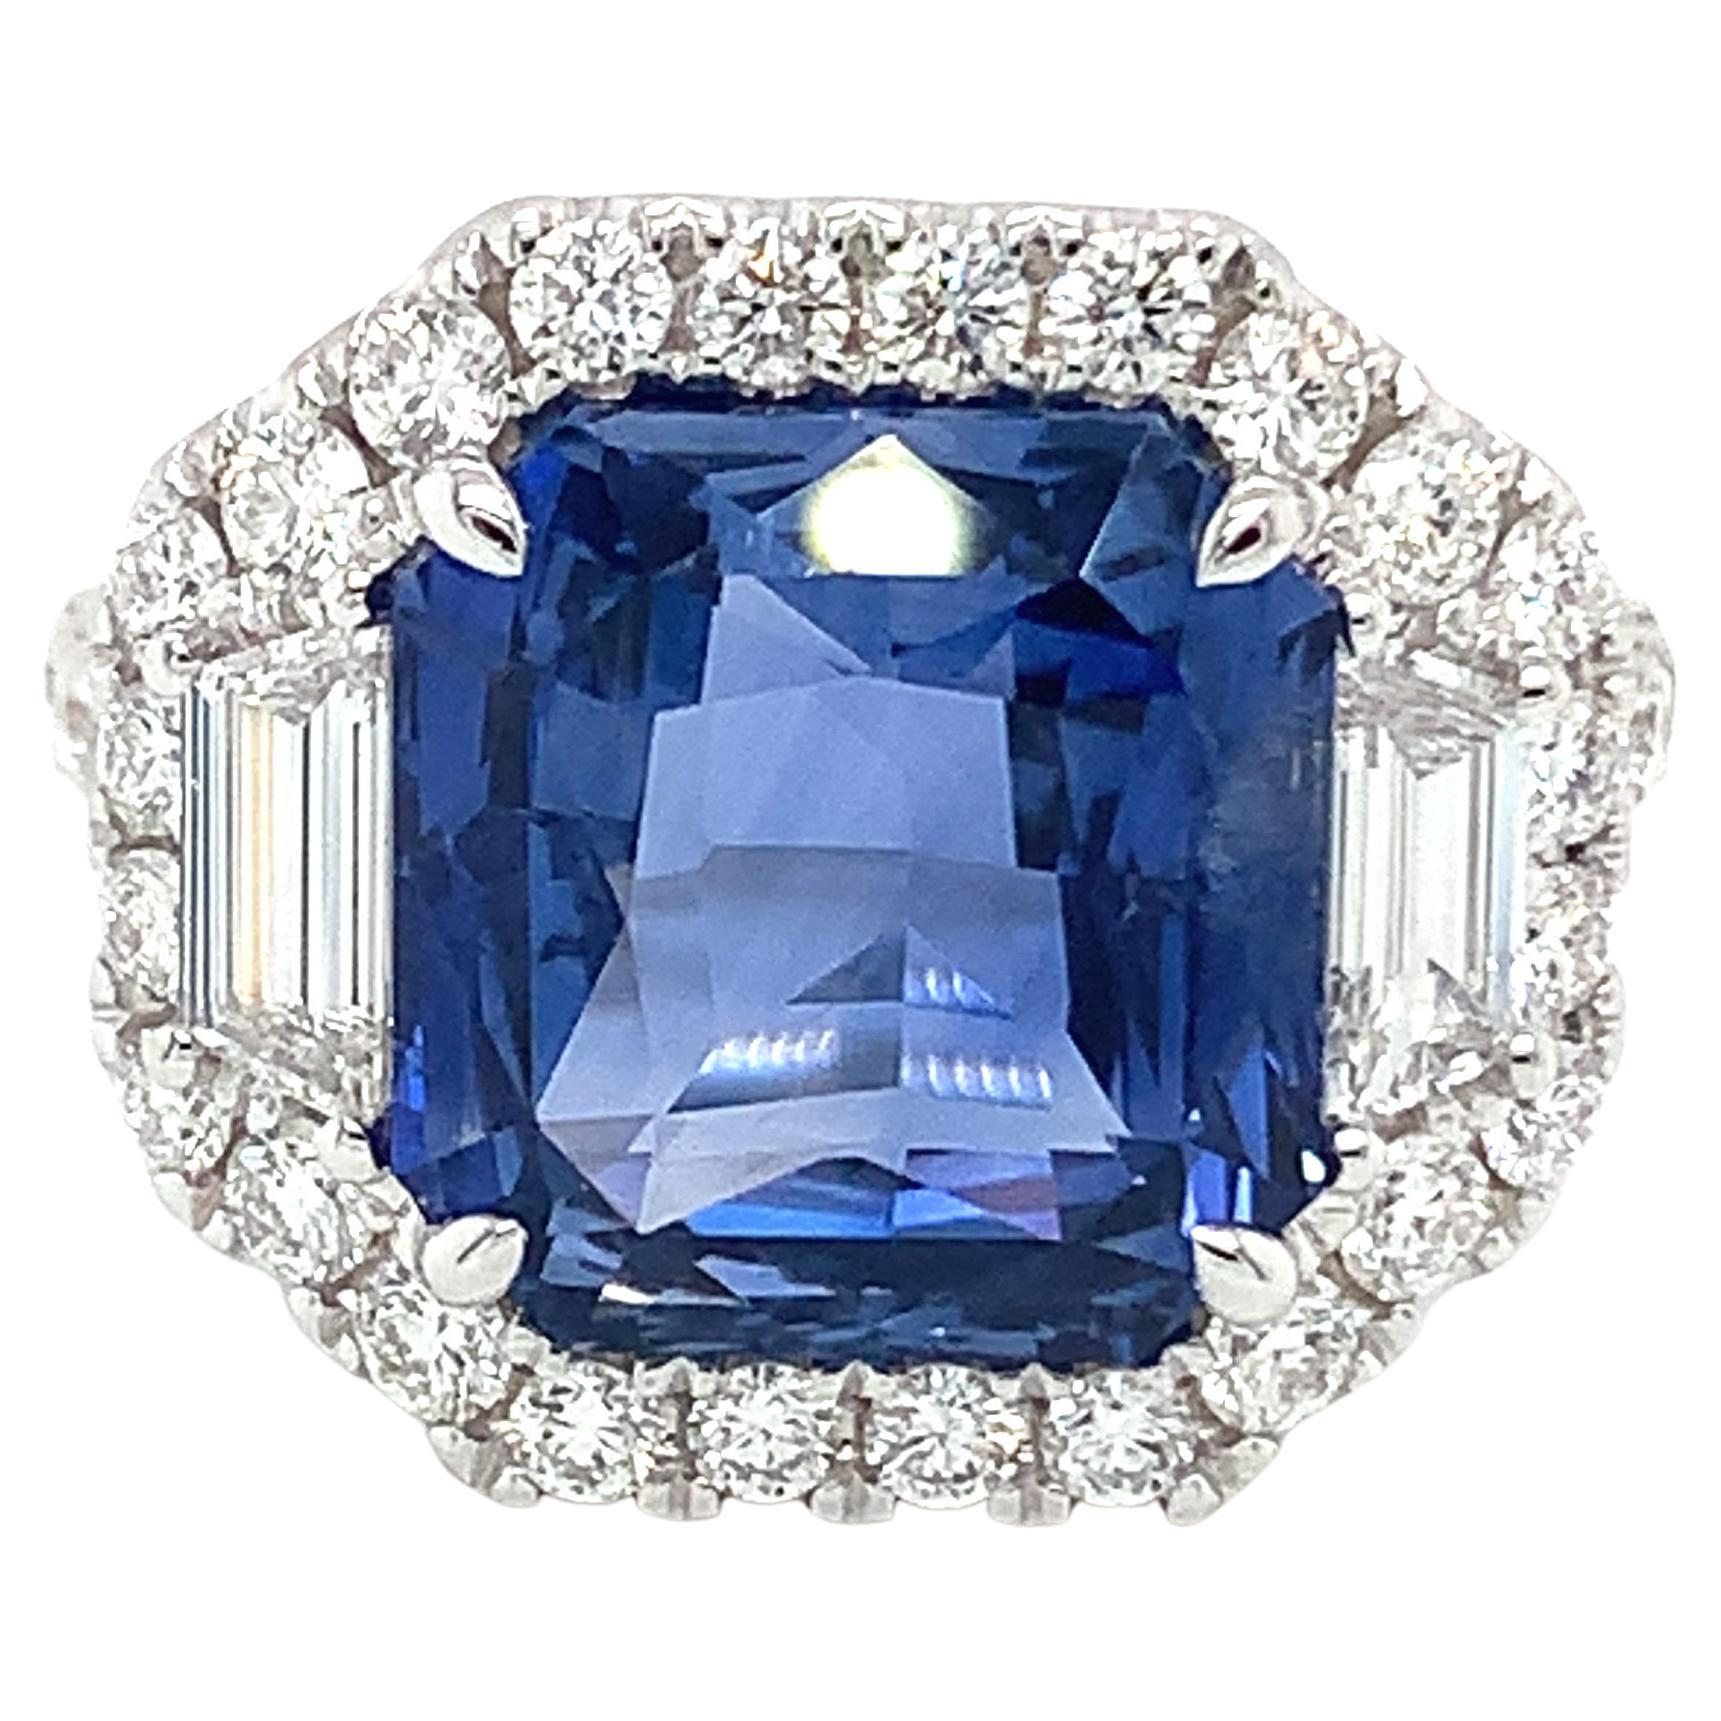 7.96 Carat Blue Sapphire & Diamond Ring in 18 Karat White Gold For Sale